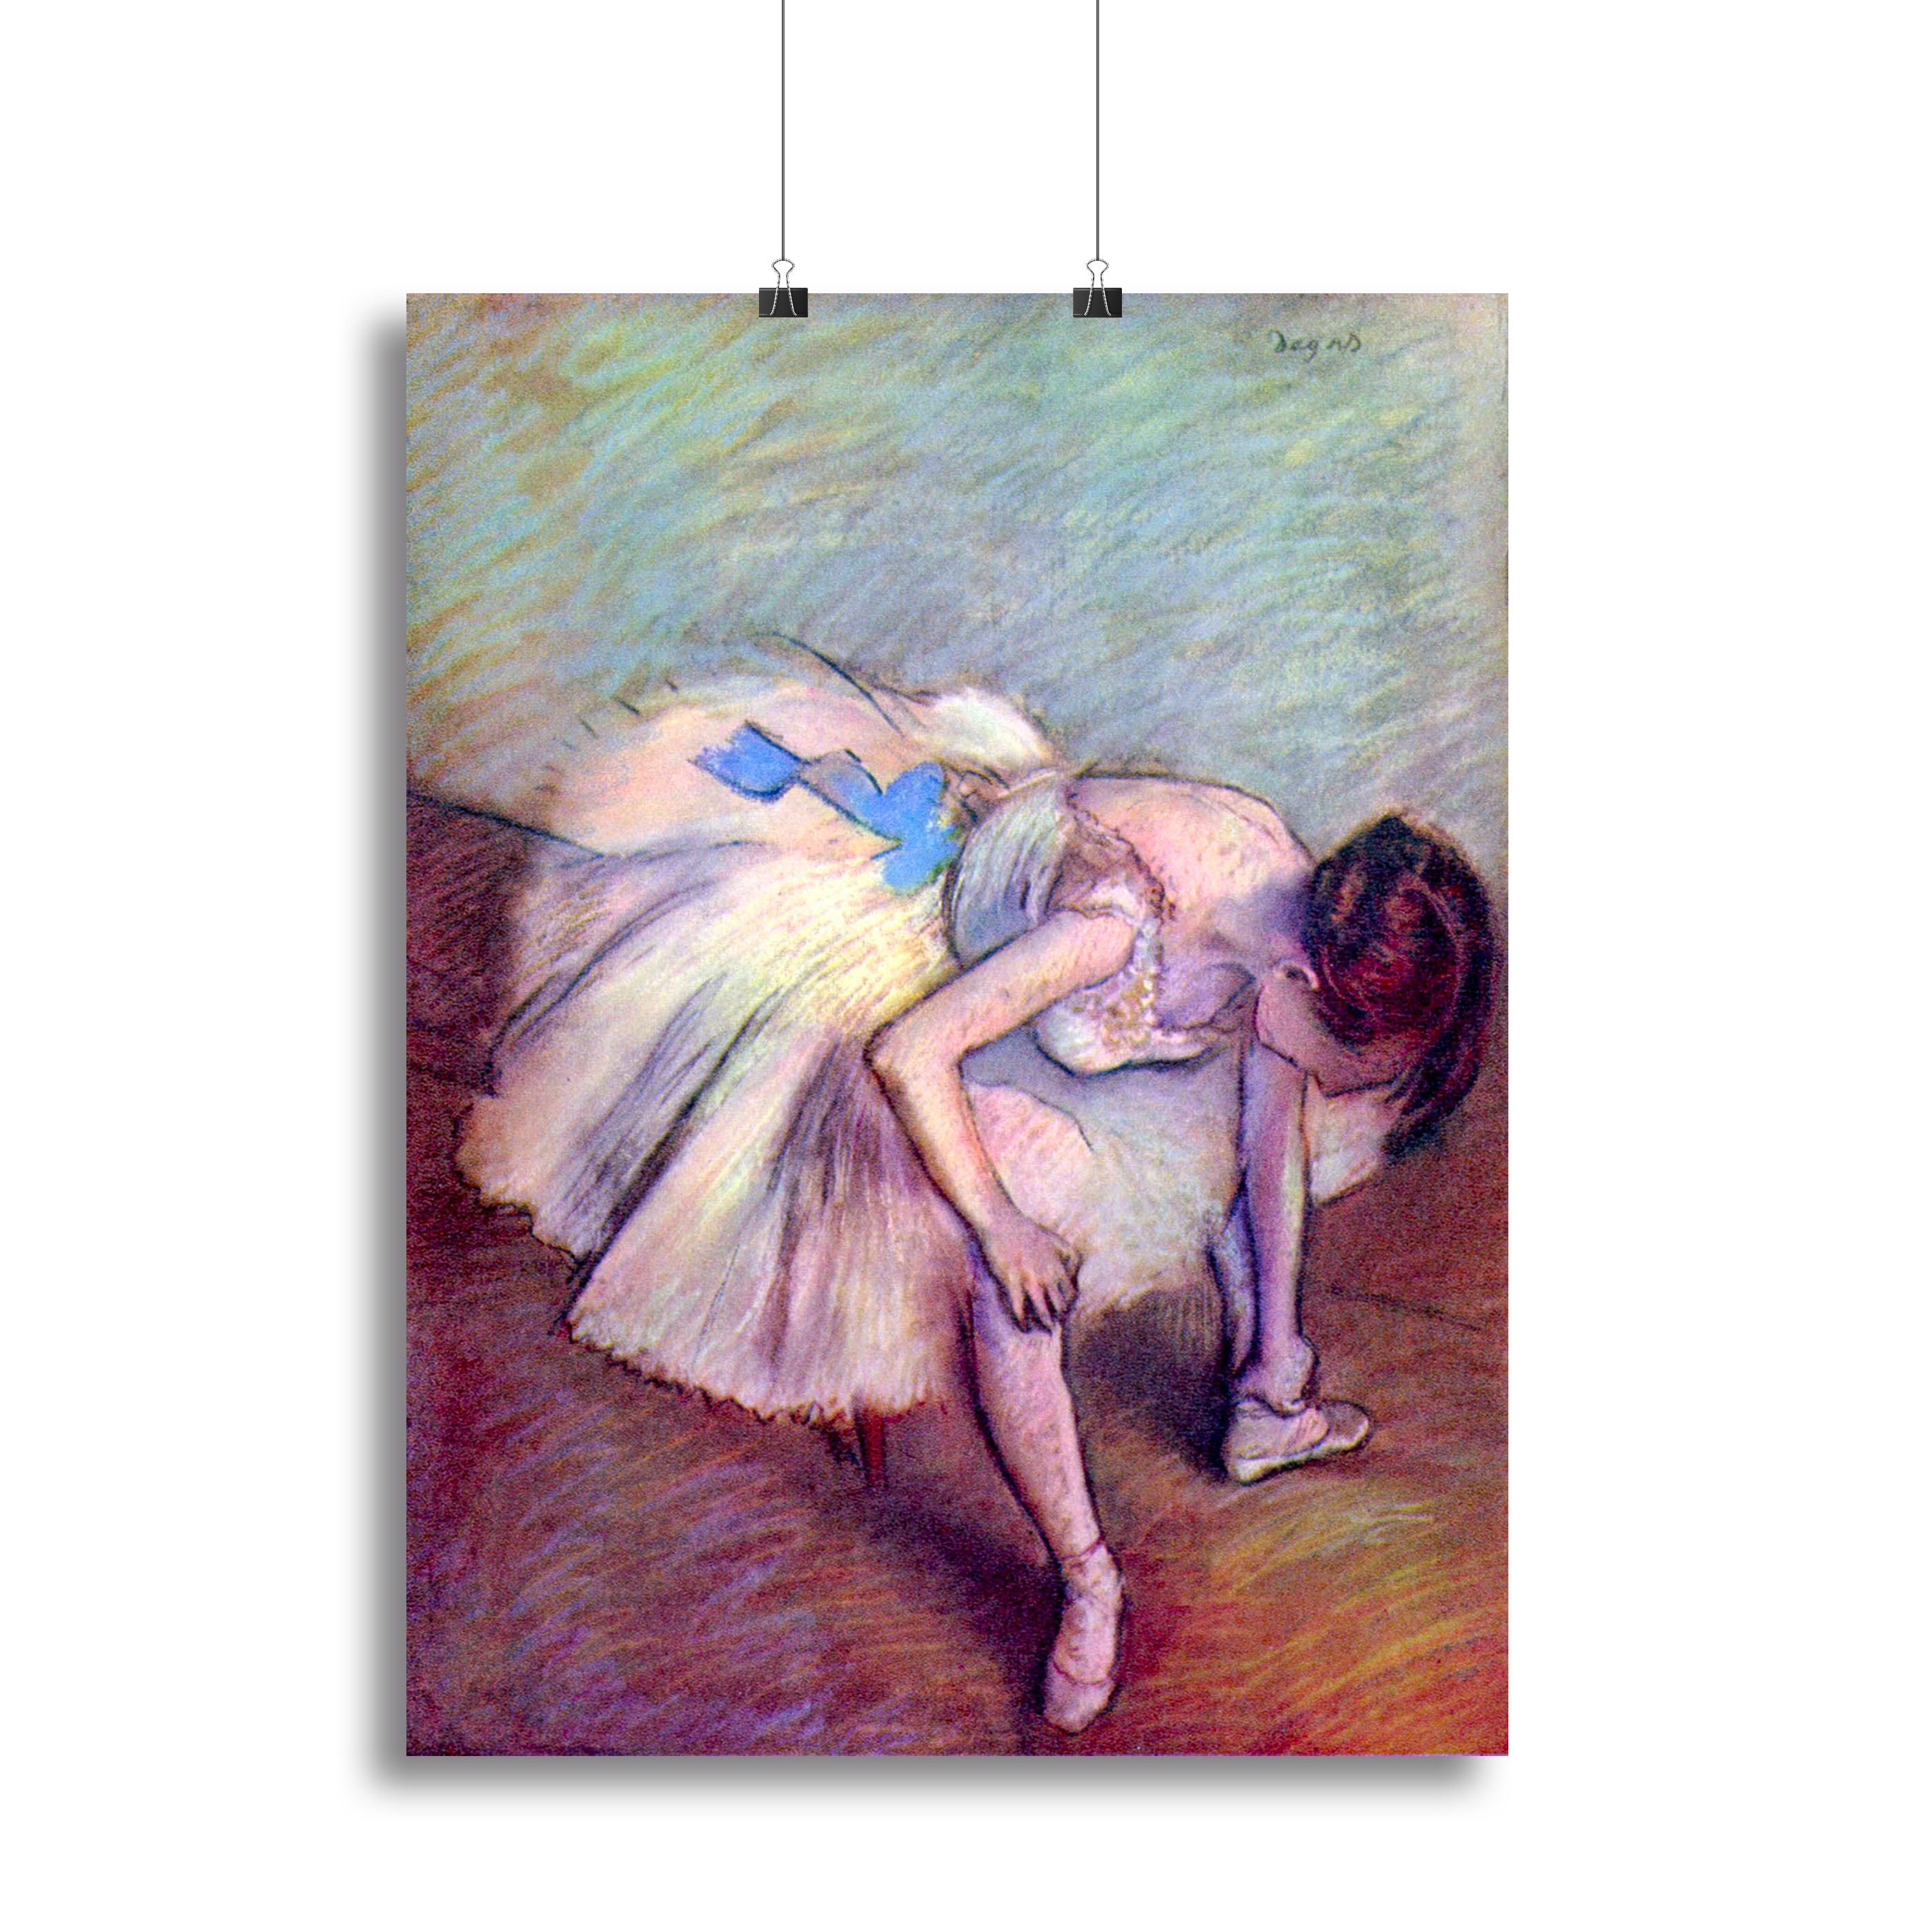 Dancer 2 by Degas Canvas Print or Poster - Canvas Art Rocks - 2